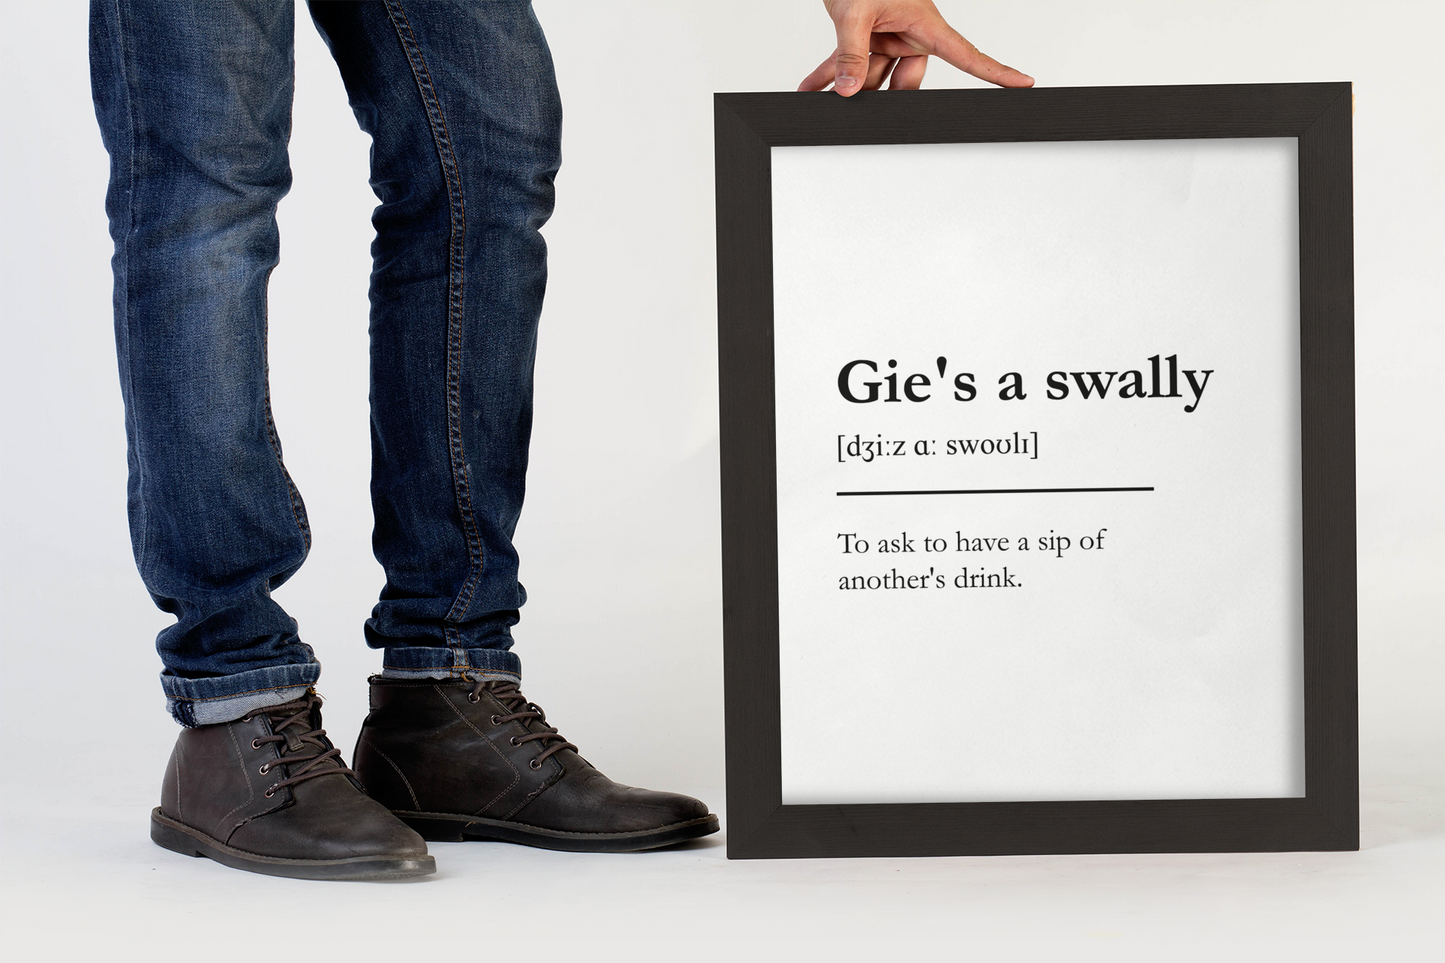 "Gie's a swally" - Scottish Slang